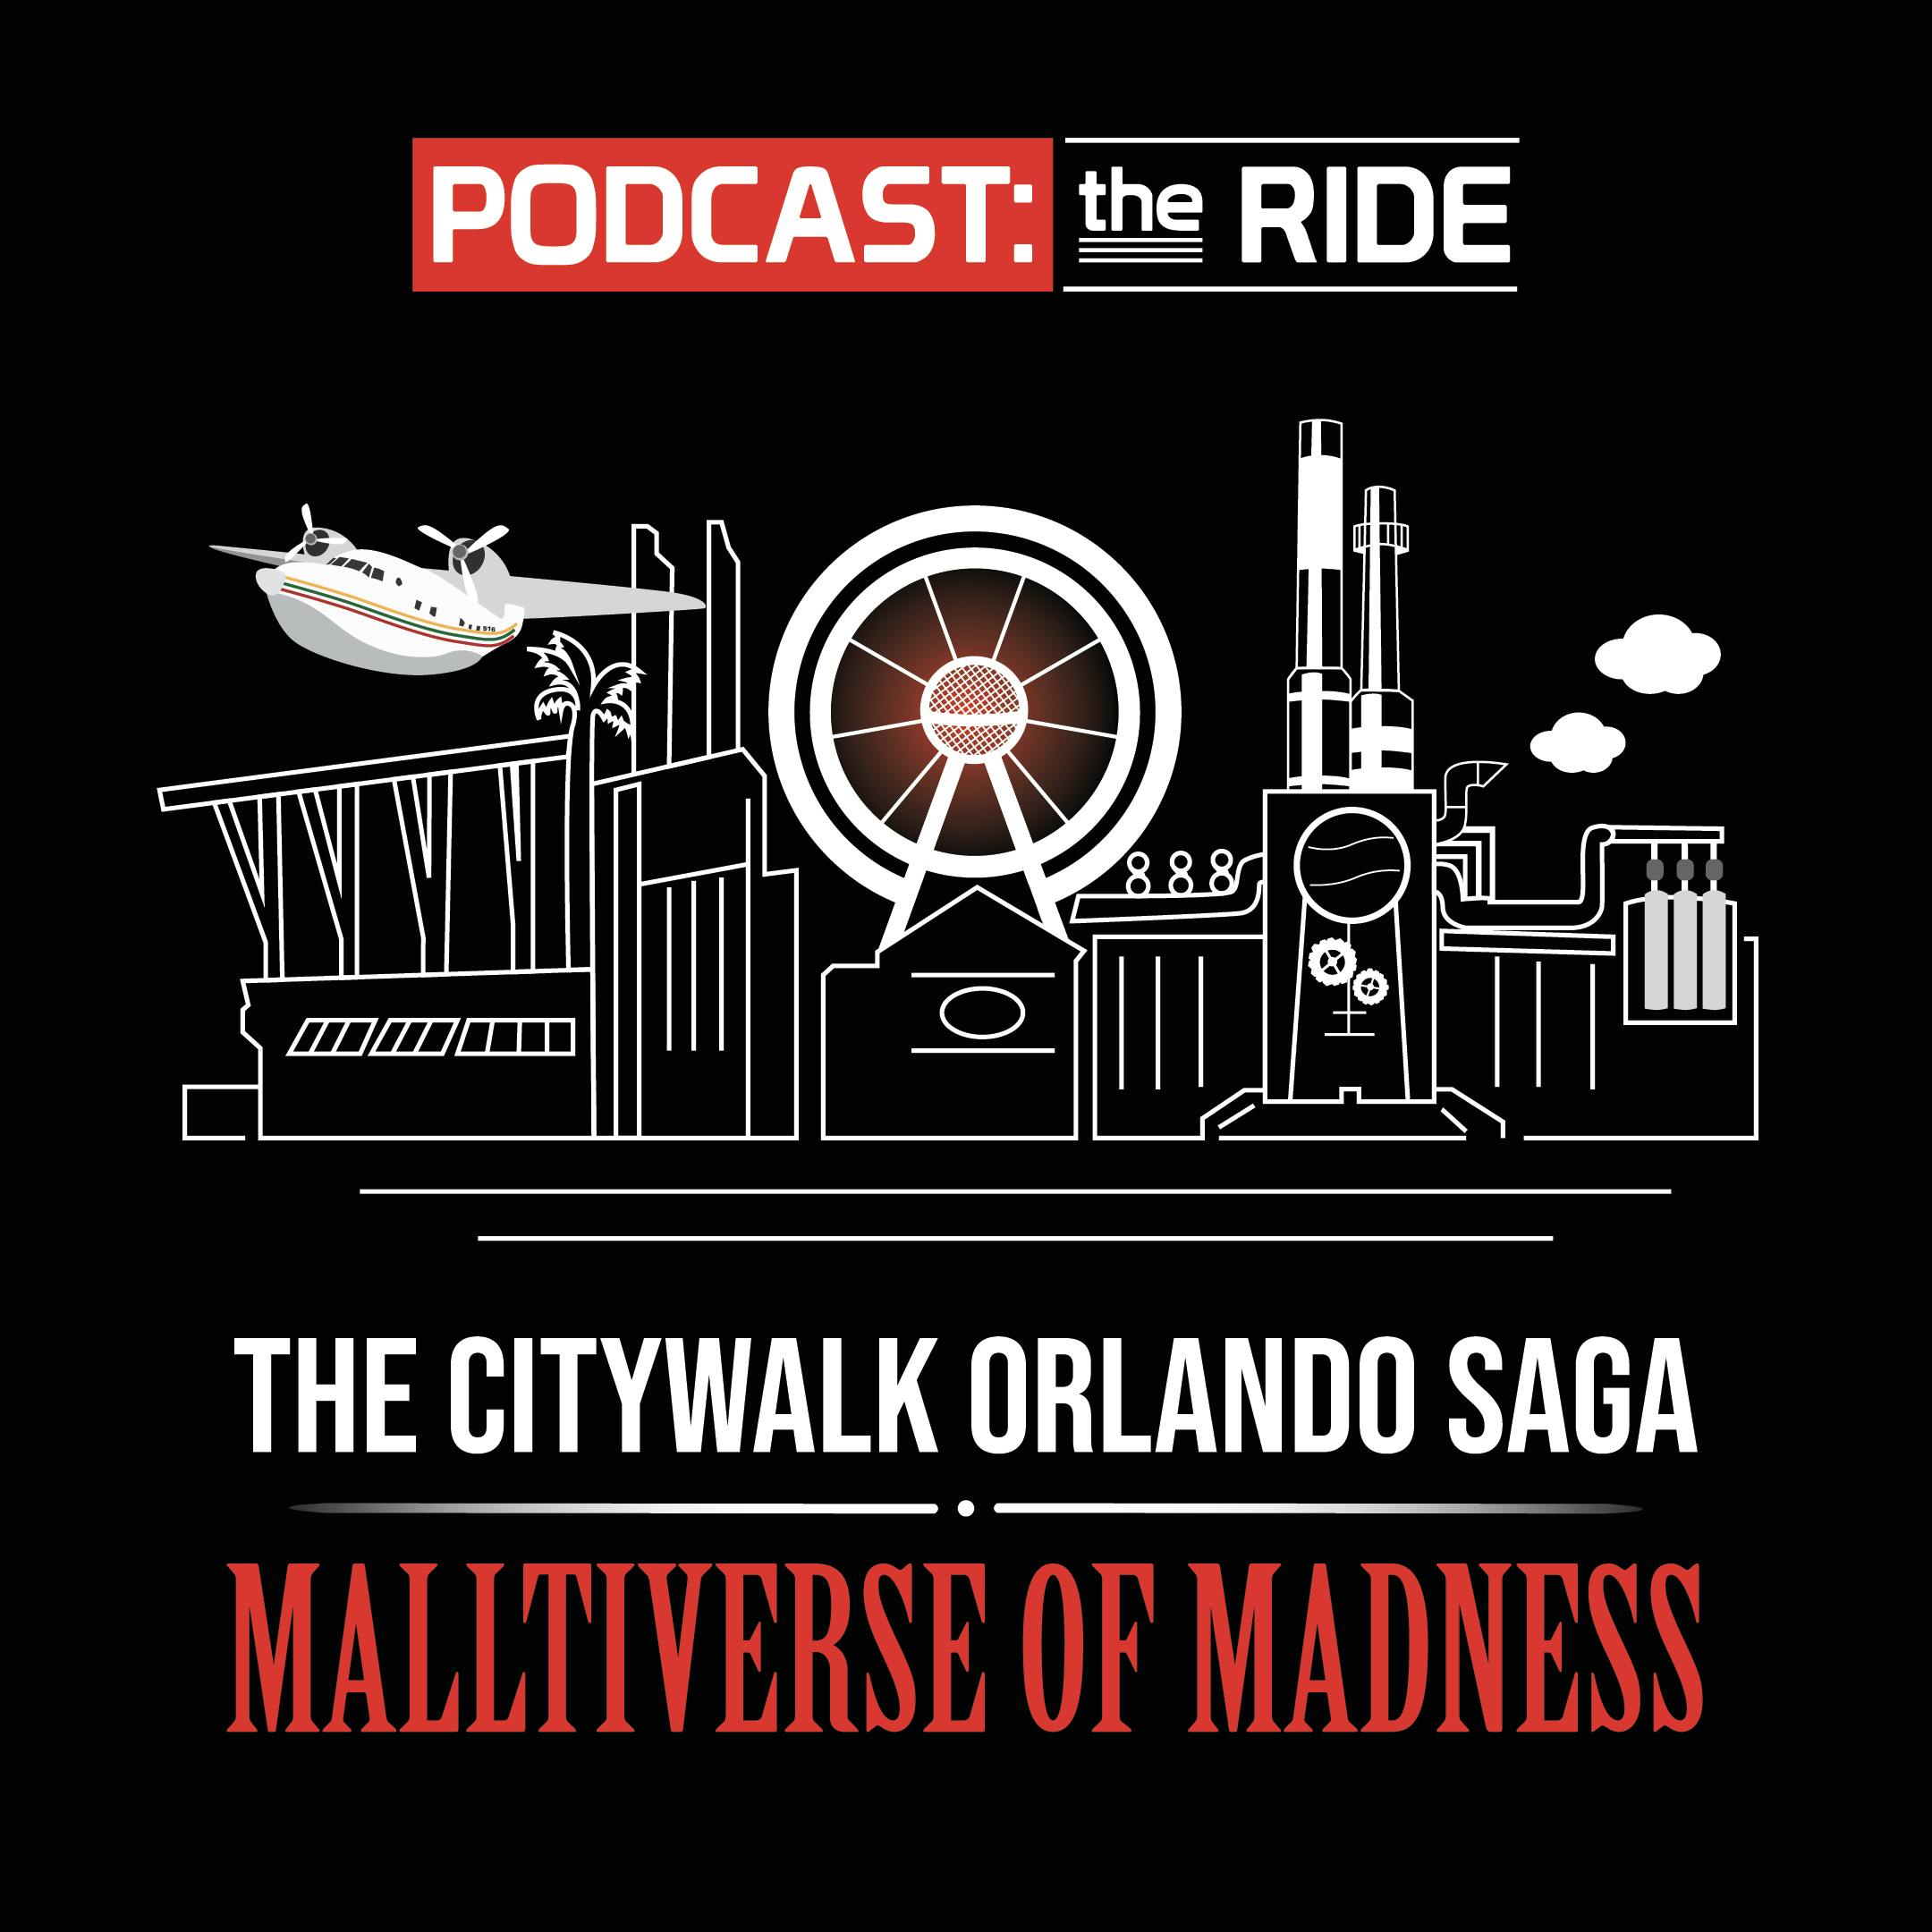 The CityWalk Orlando Saga: Malltiverse of Madness 6 - 2 with Carlye Wisel